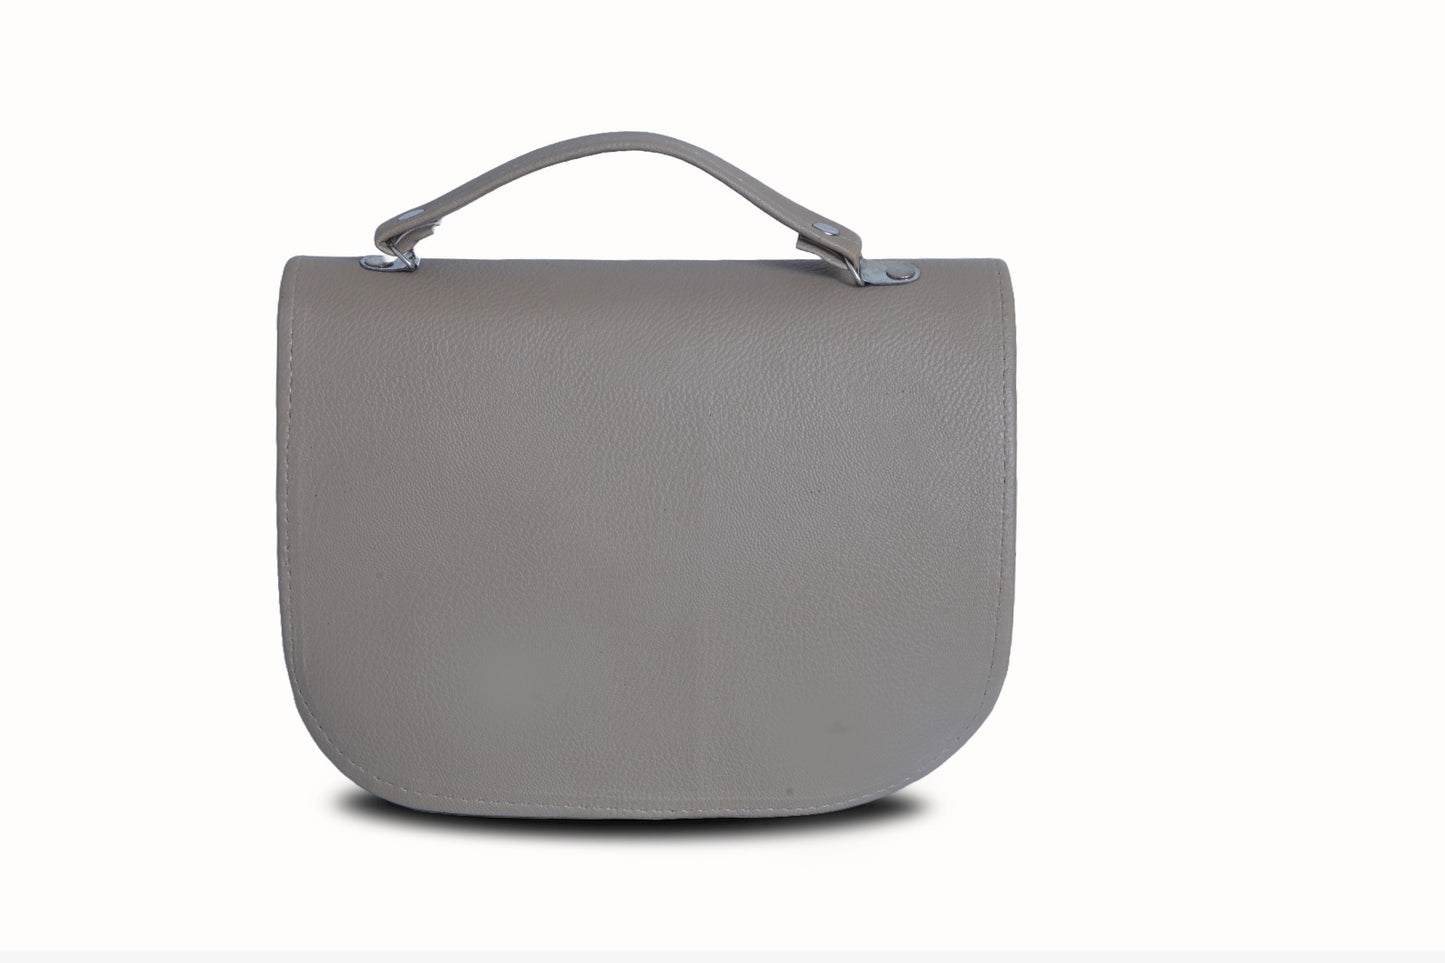 Misty Grey Glamour Bag